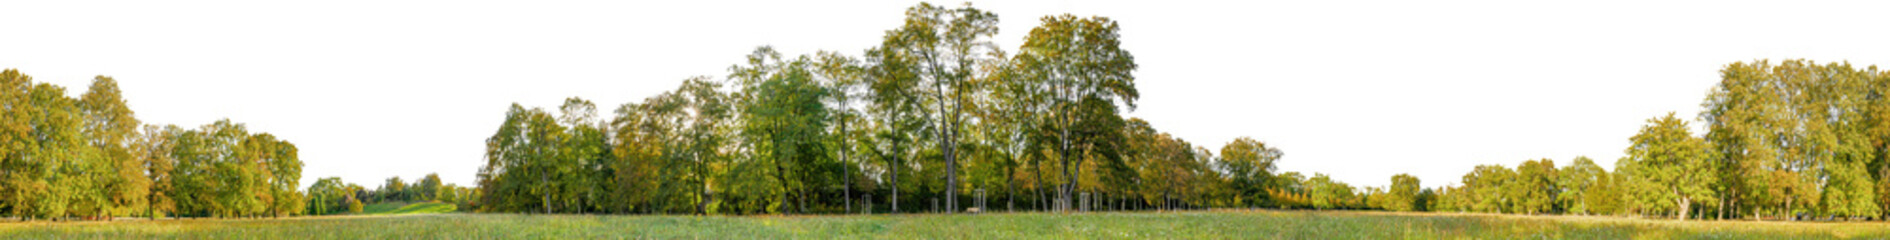 tree line trees autumn xl horizontal seamless arch viz cutout - Powered by Adobe